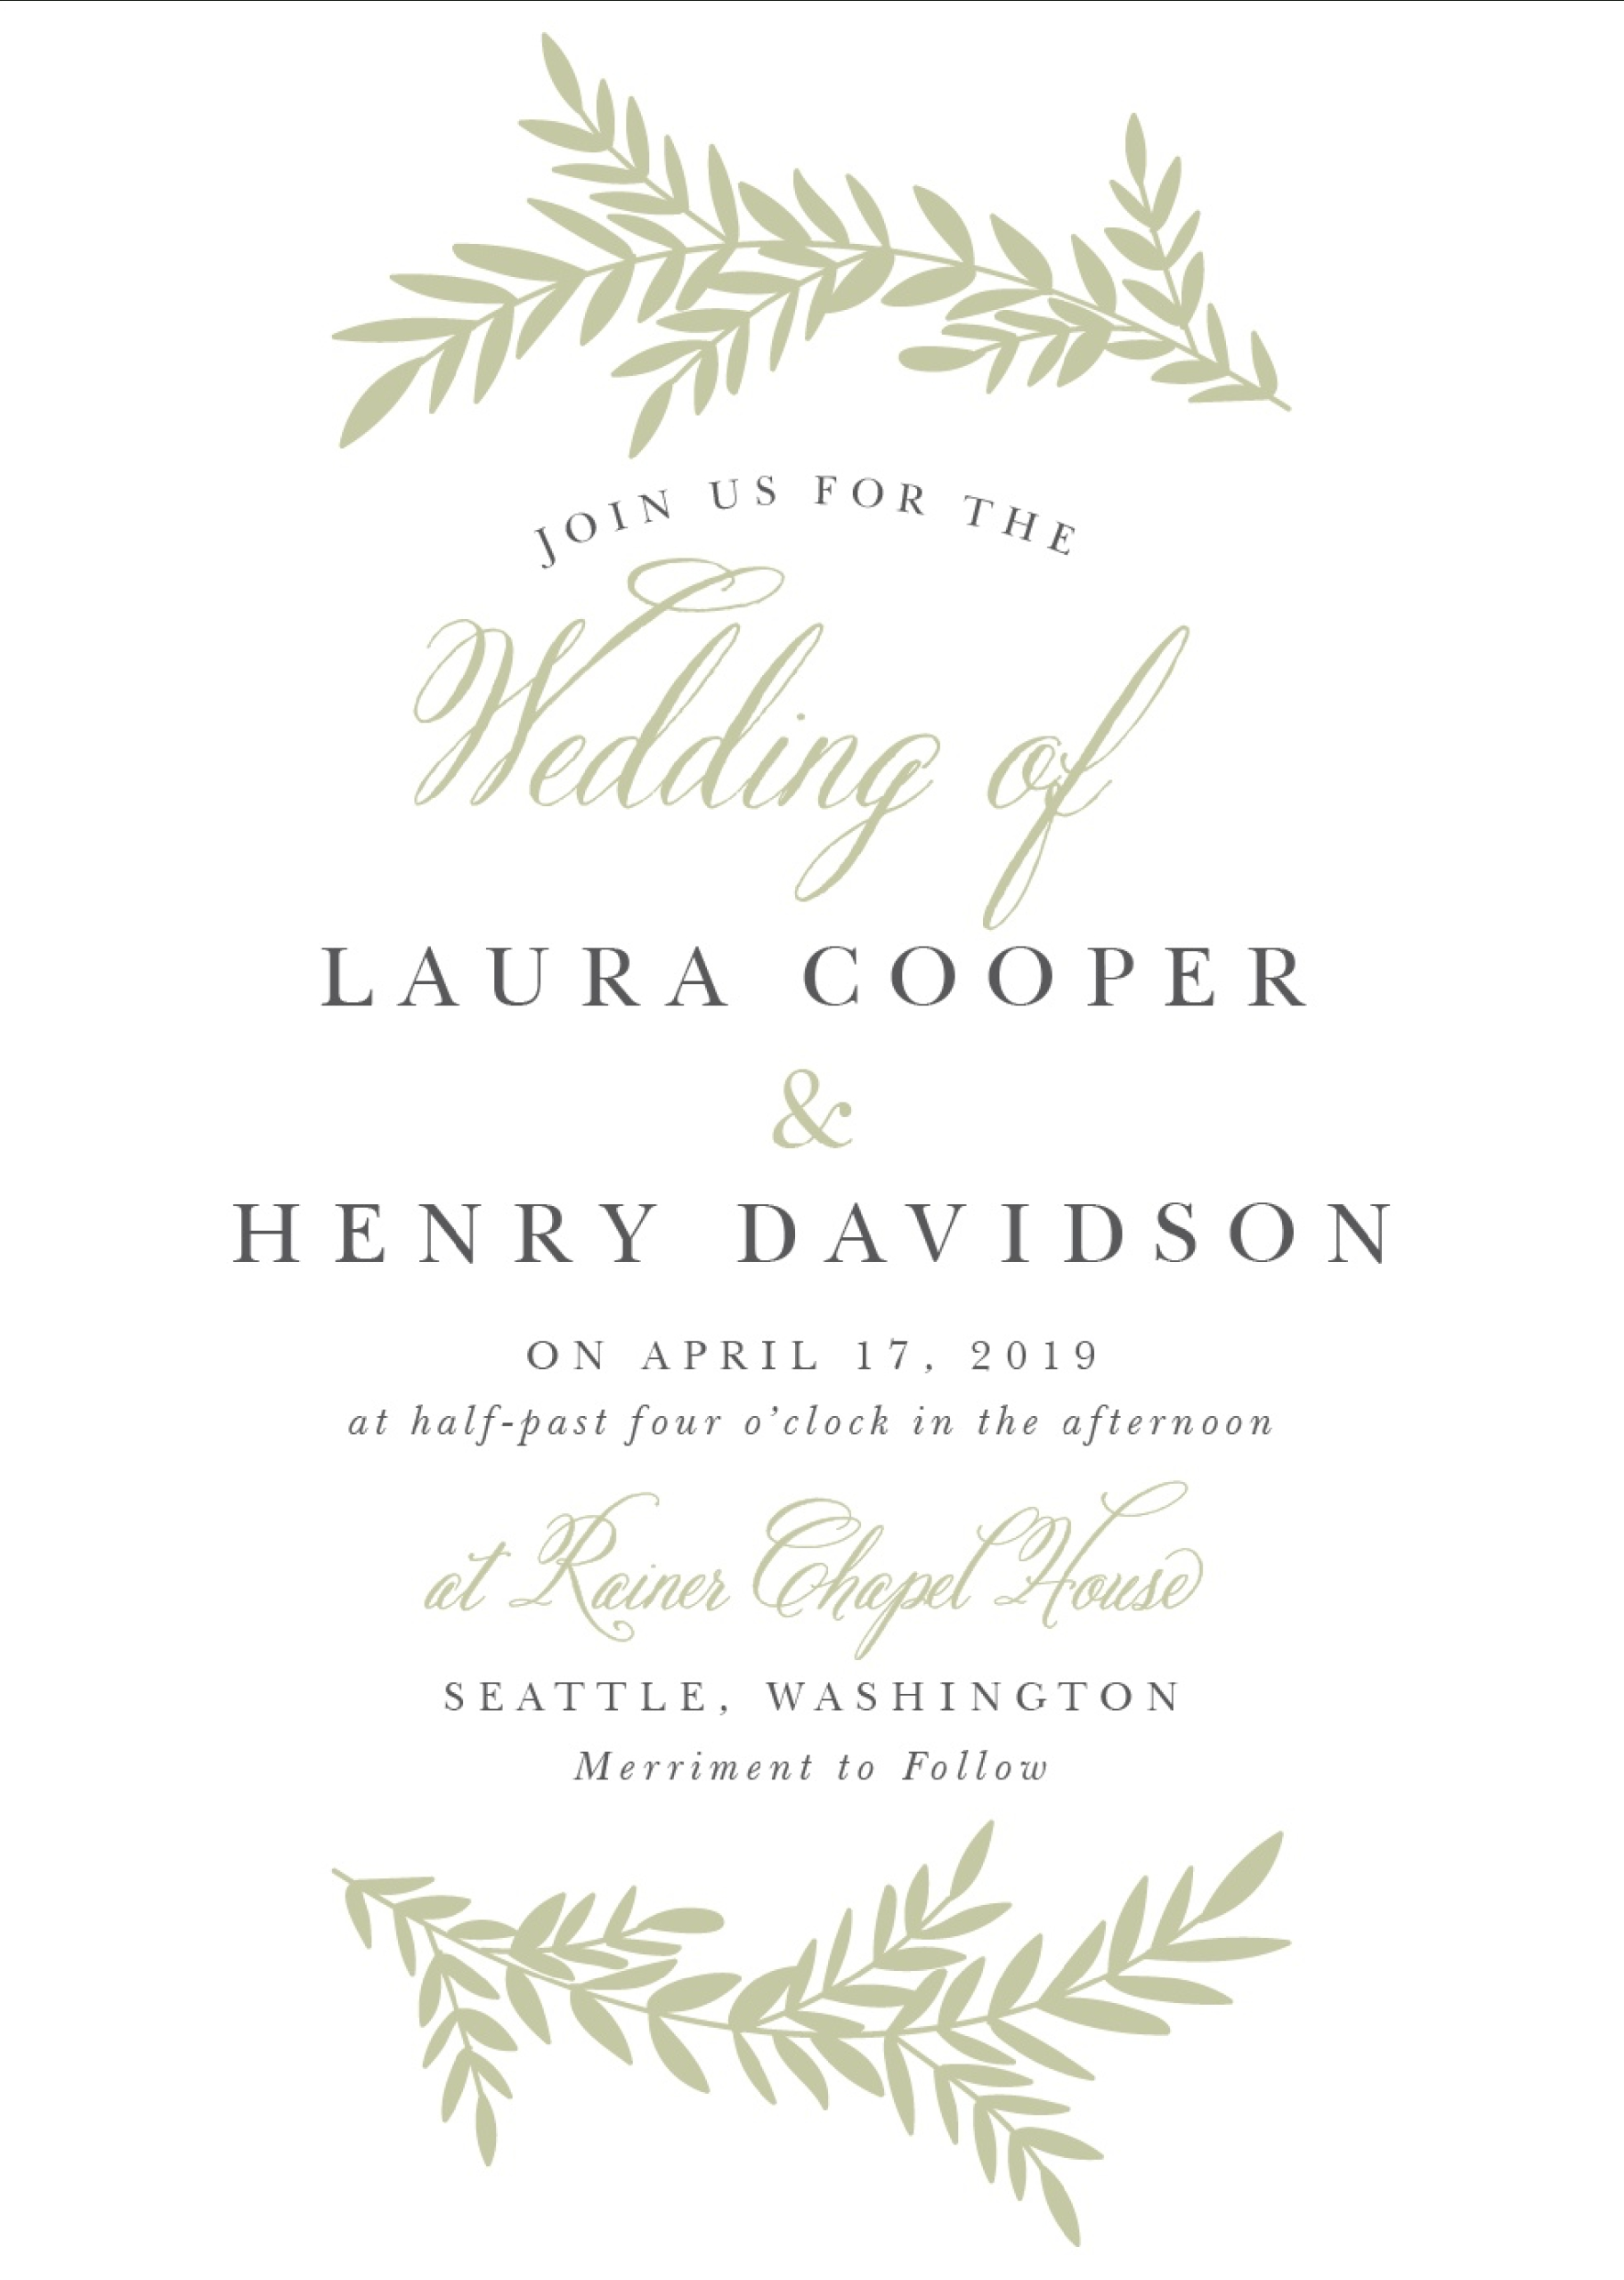 Wedding Invitation Wording Samples Throughout Sample Wedding Invitation Cards Templates